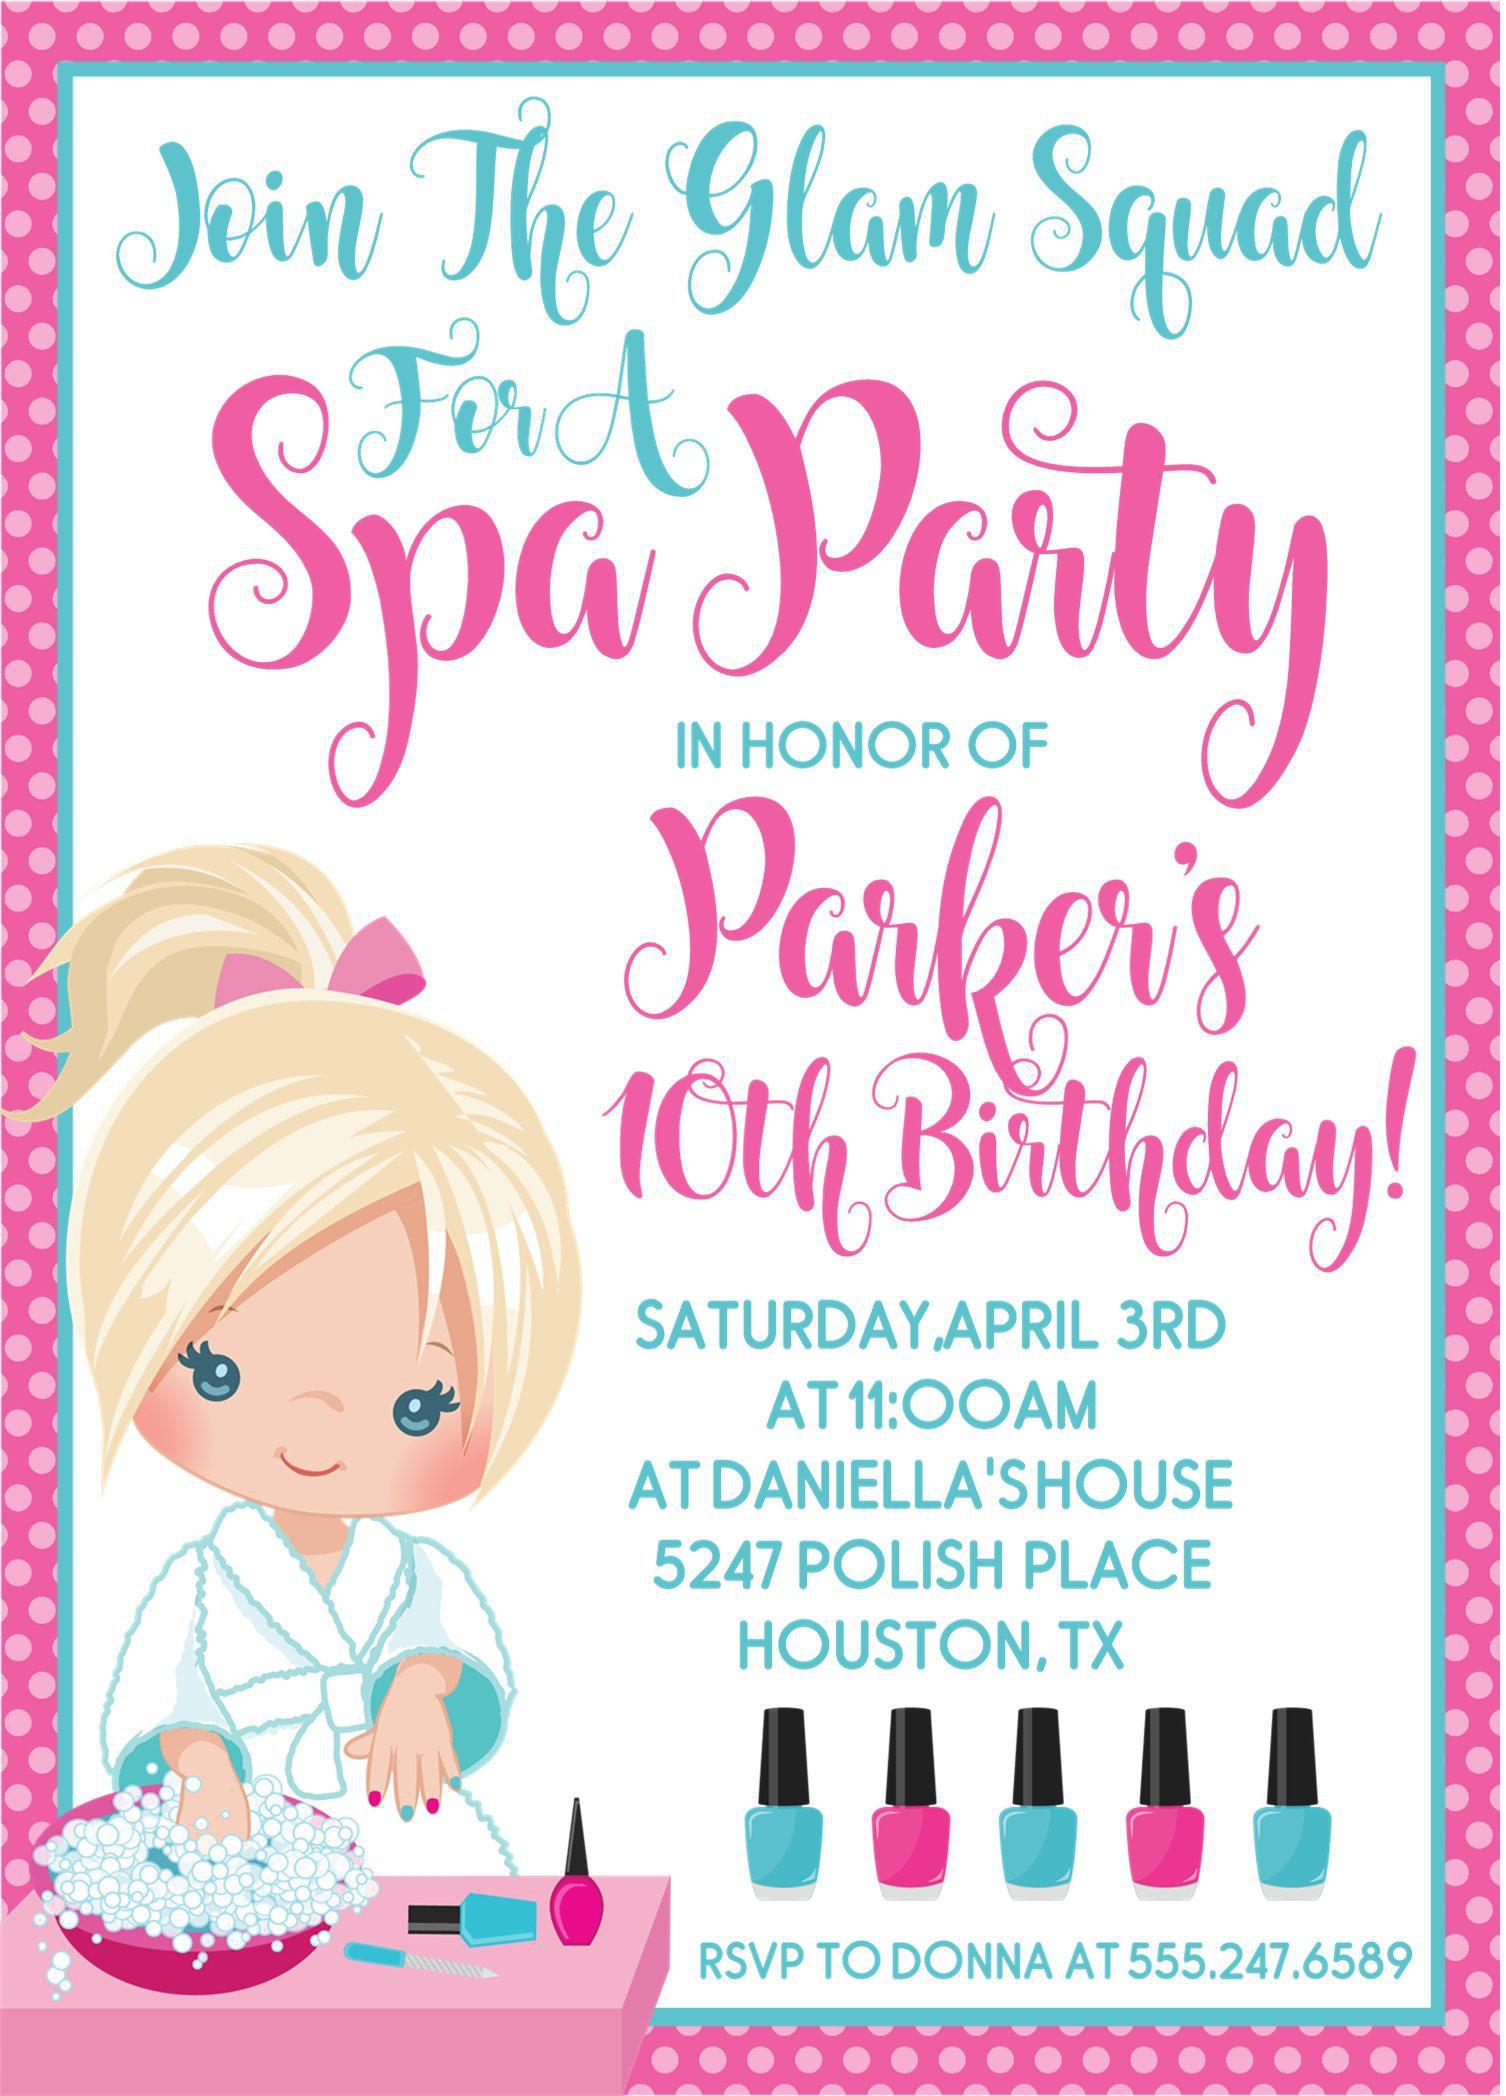 Spa Birthday Party Invitations